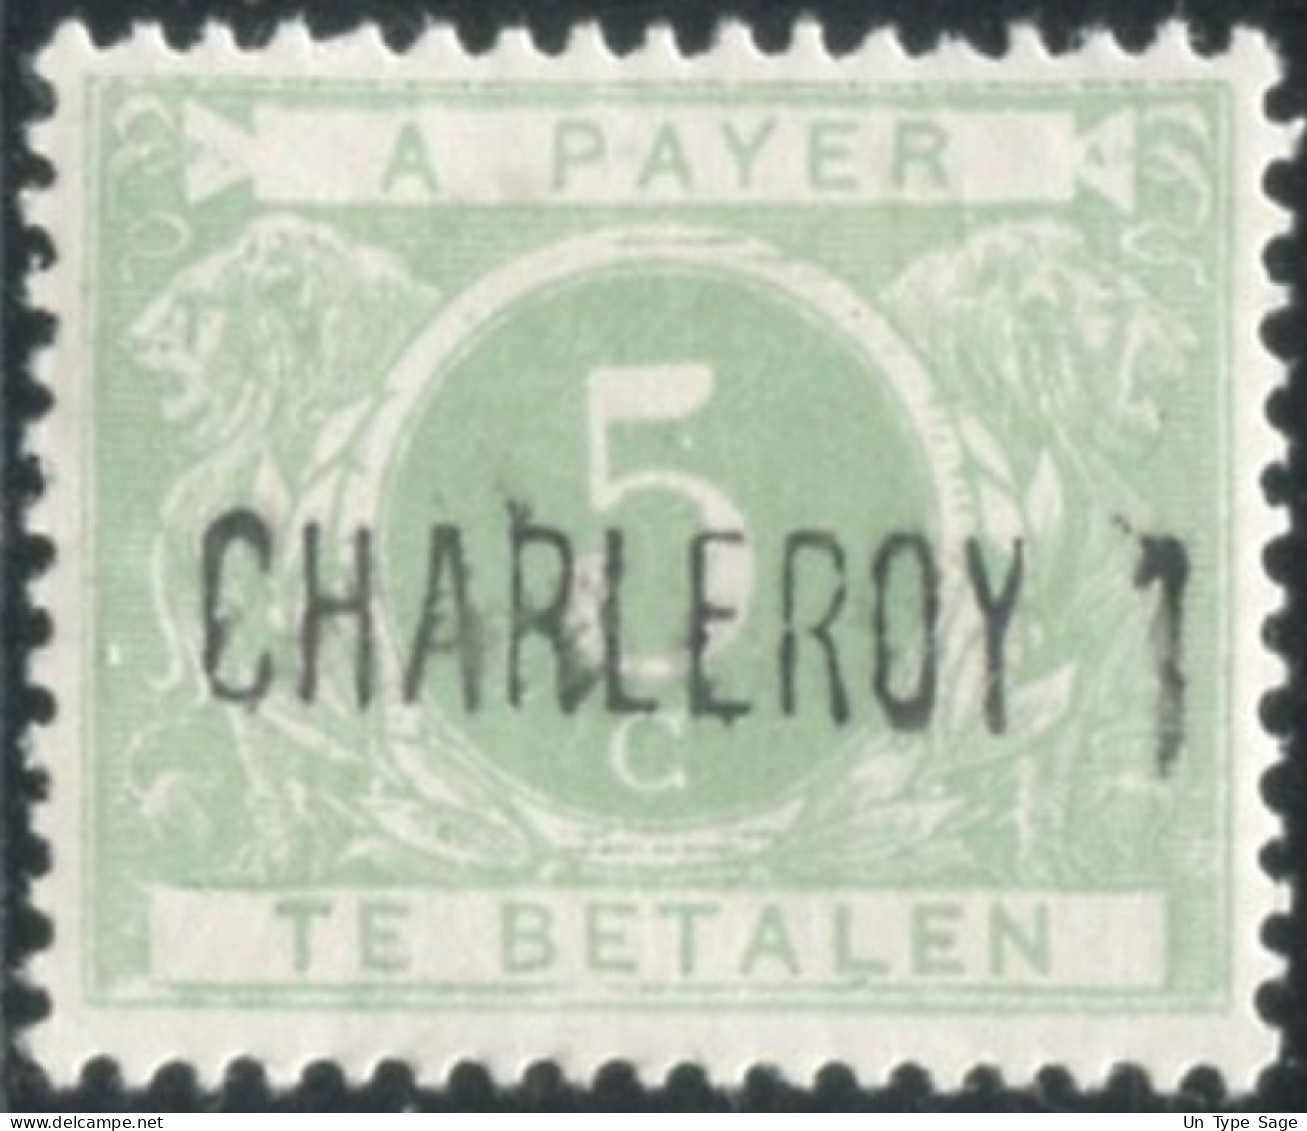 Belgique Timbre-taxe (TX) - Surcharge Locale De Distributeur - CHARLEROY 1 - (F995) - Stamps